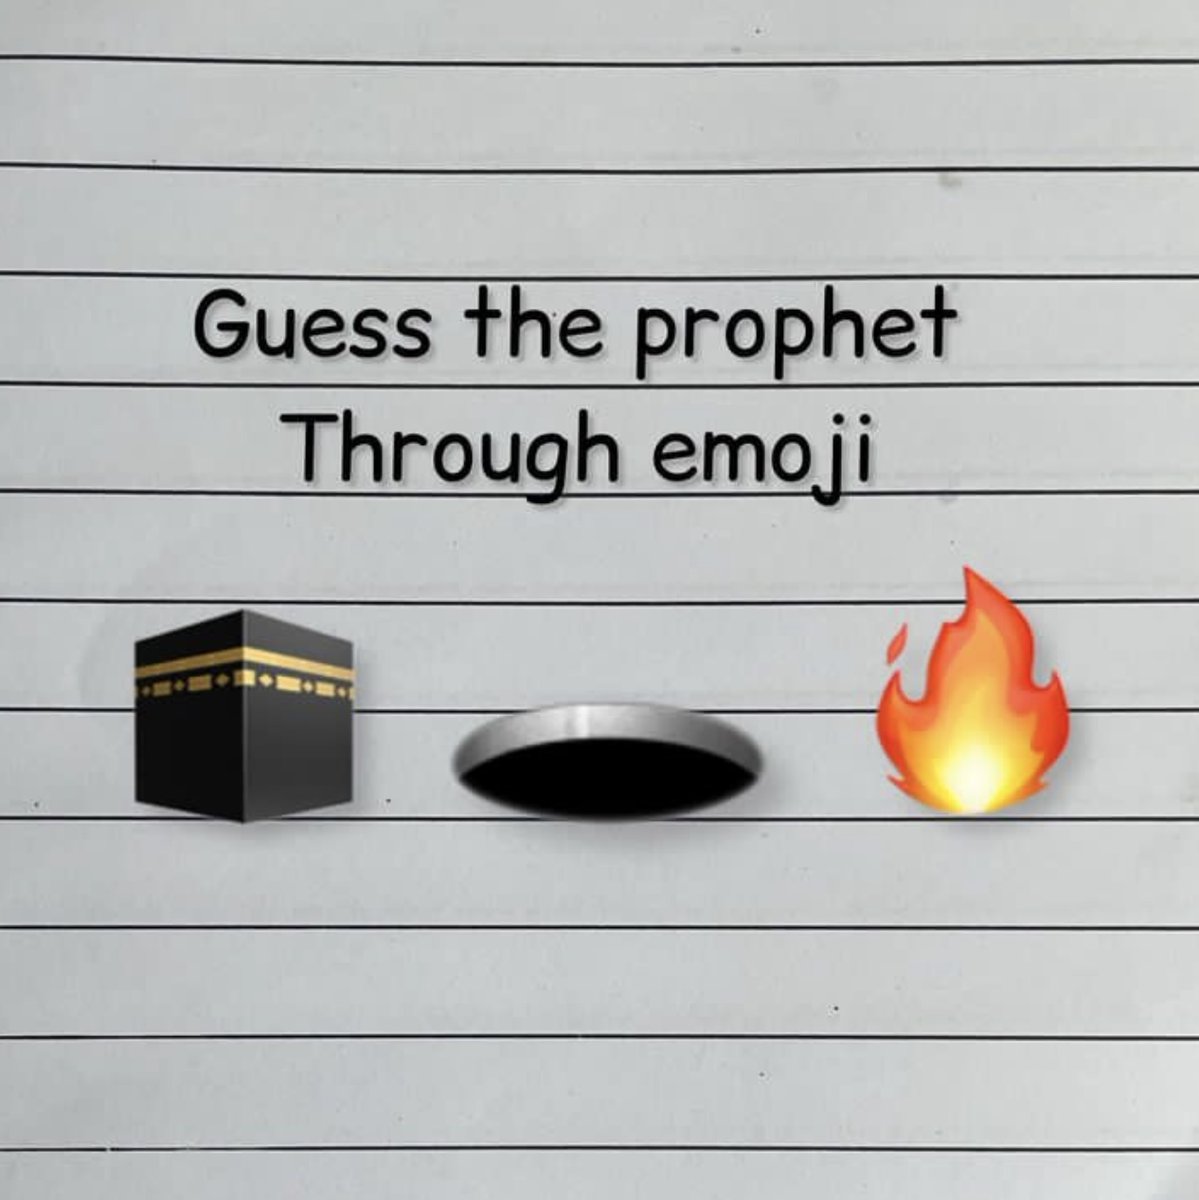 Quiz time. Guess the prophet through emoji?